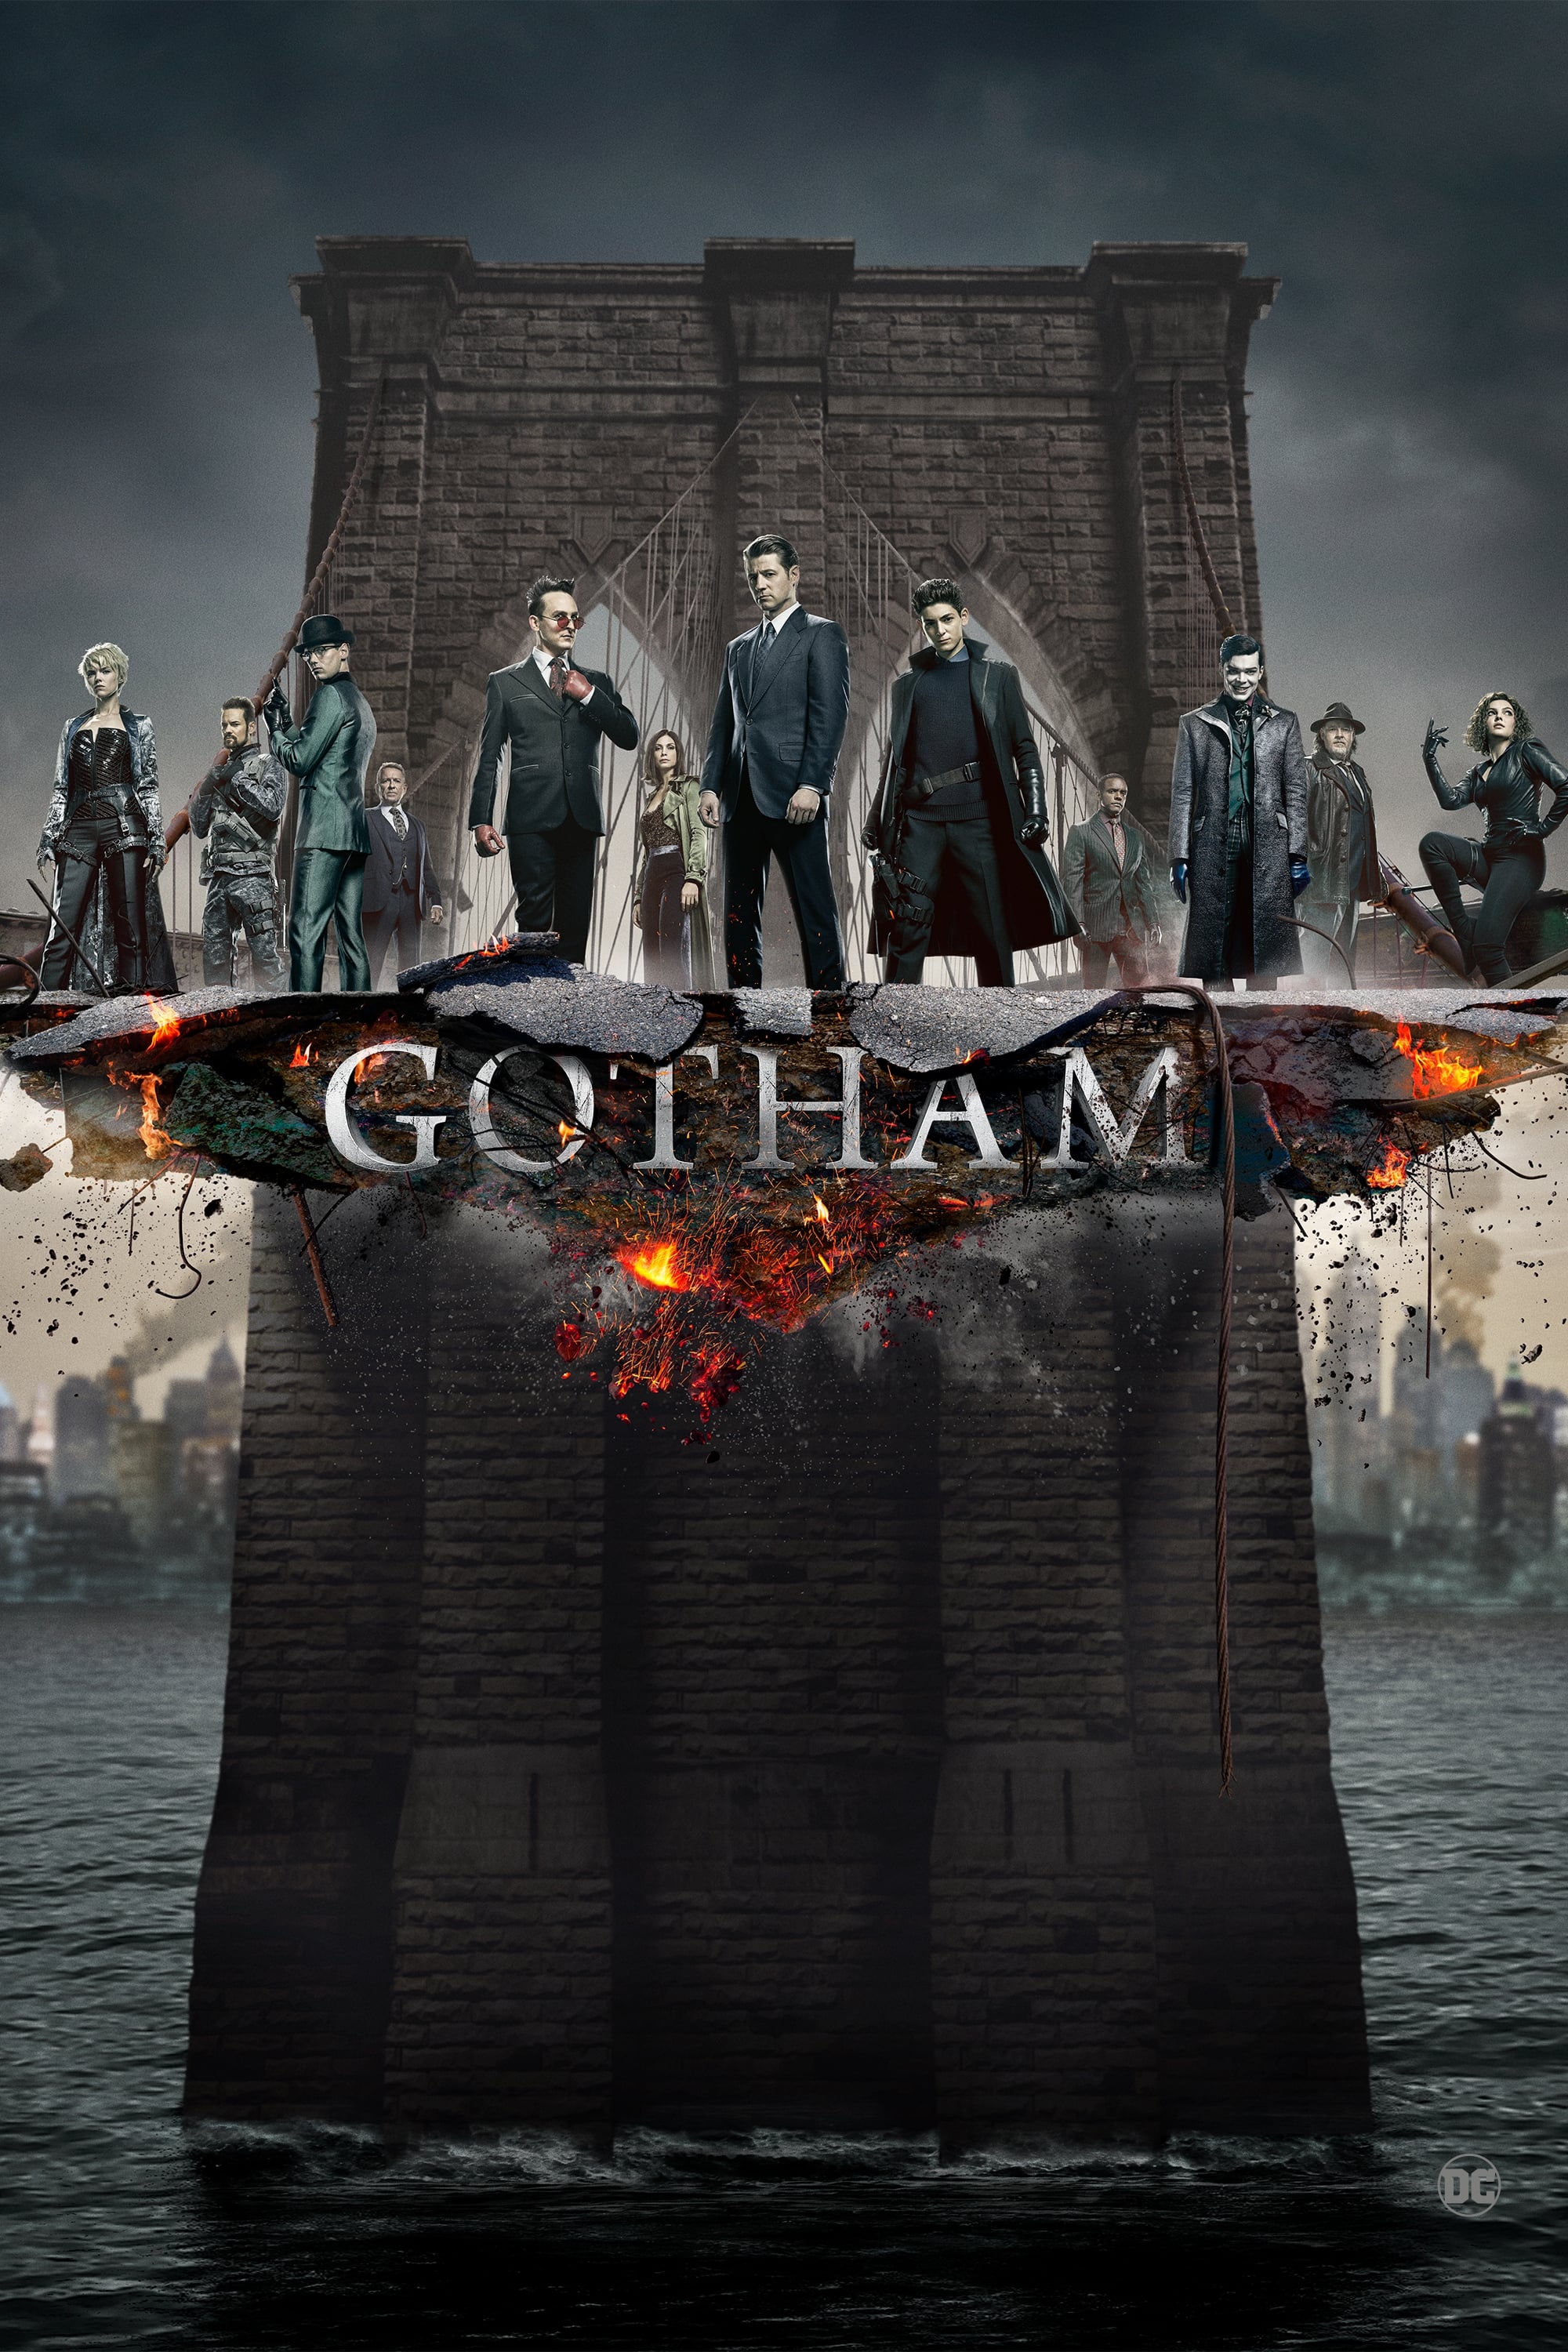 Gotham Knights (TV Series 2023) - IMDb